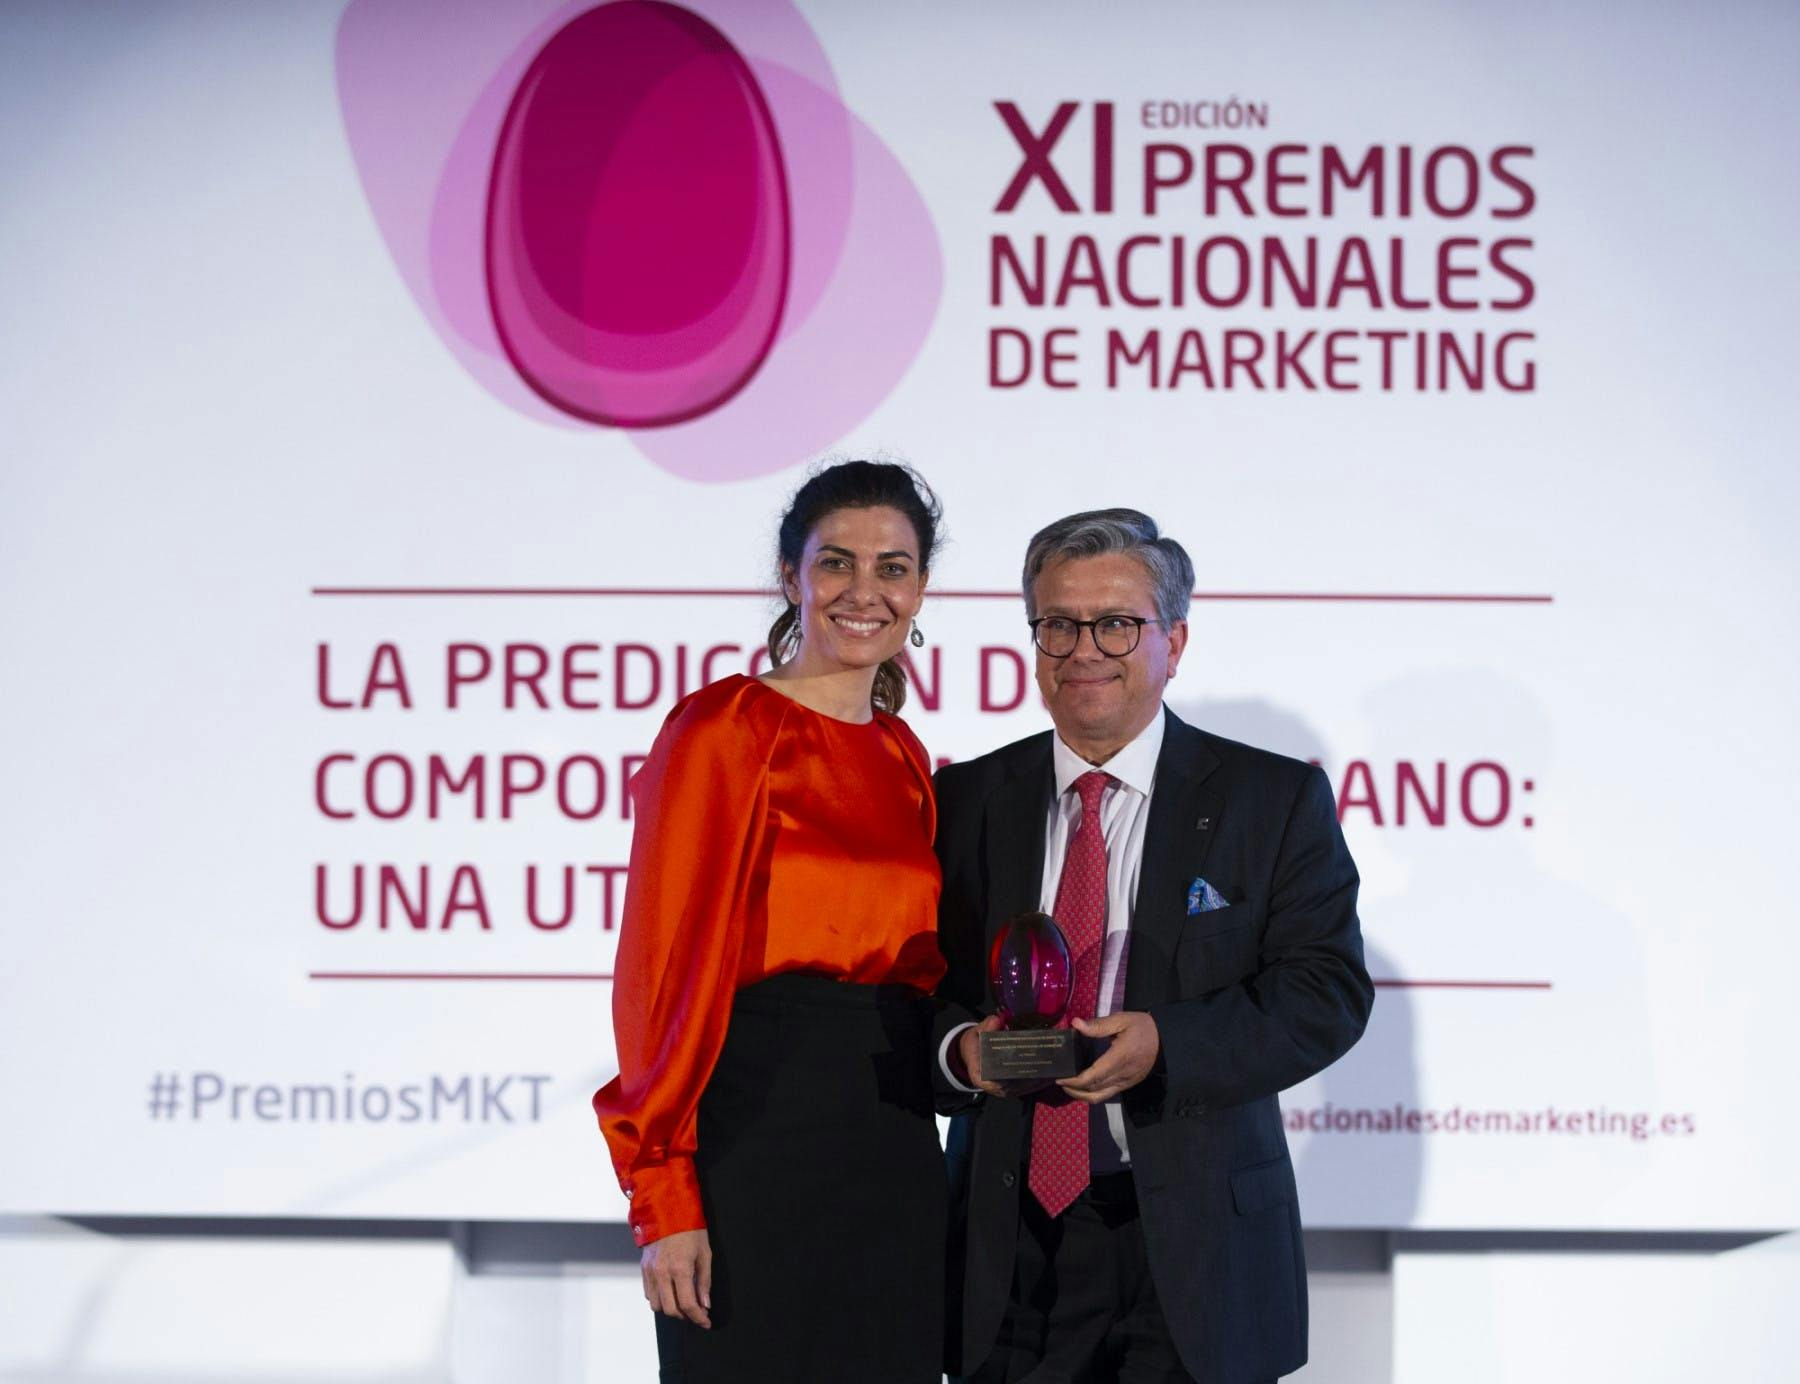 Image 33 of Santiago Alfonso Mejor Profesional de Marketing 2019 1 in Santiago Alfonso, "Best Marketing Professional 2019" - Cosentino